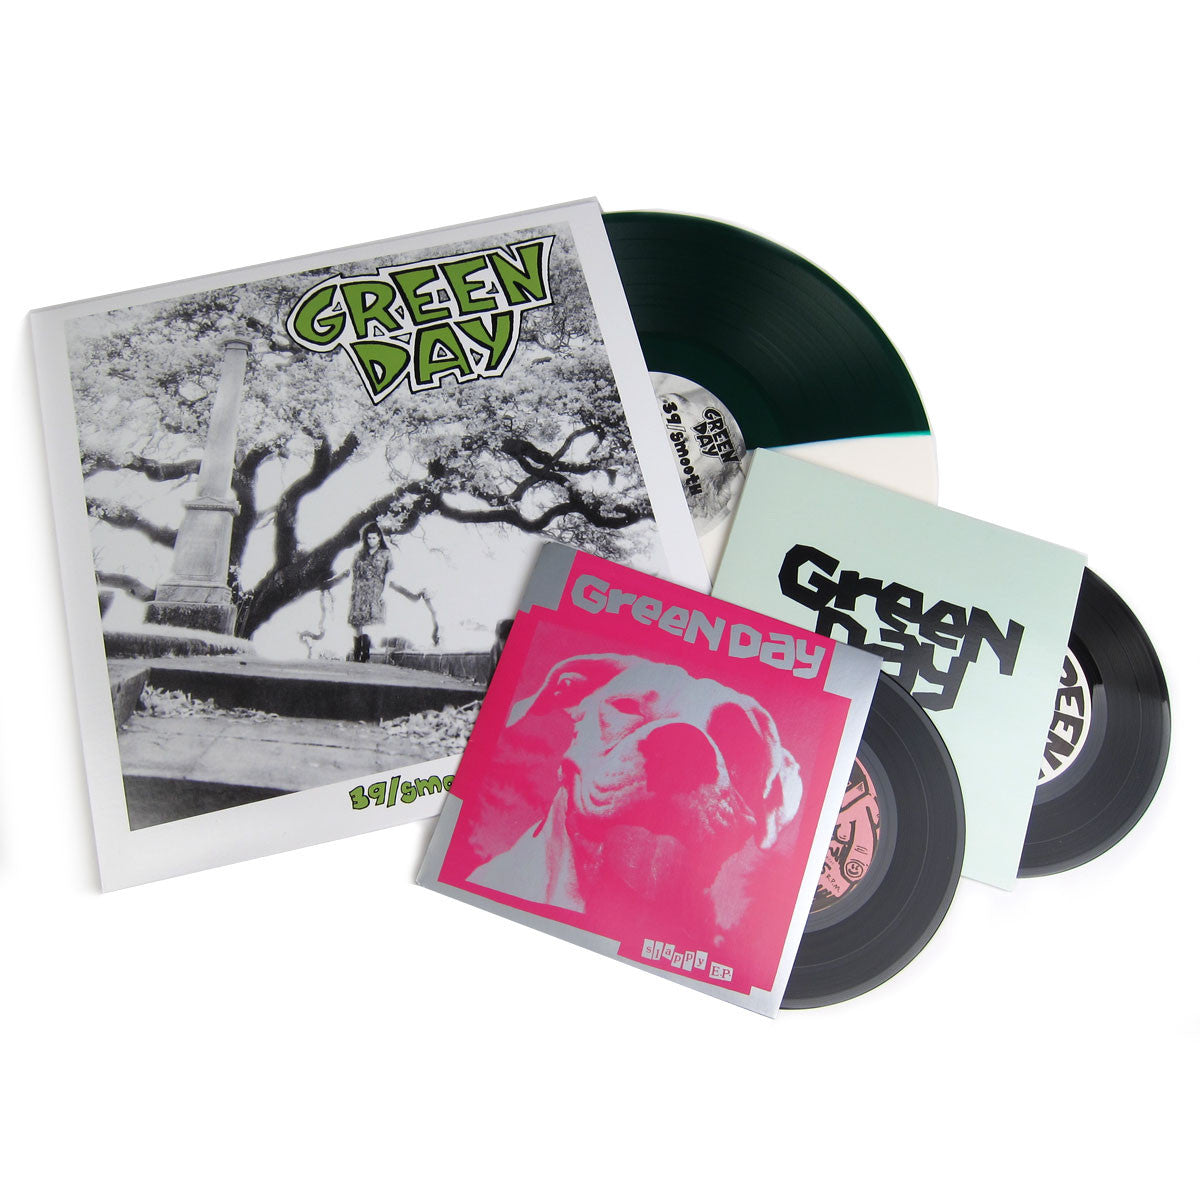 Green Day: 39/Smooth (Colored Vinyl) Vinyl LP+2x7